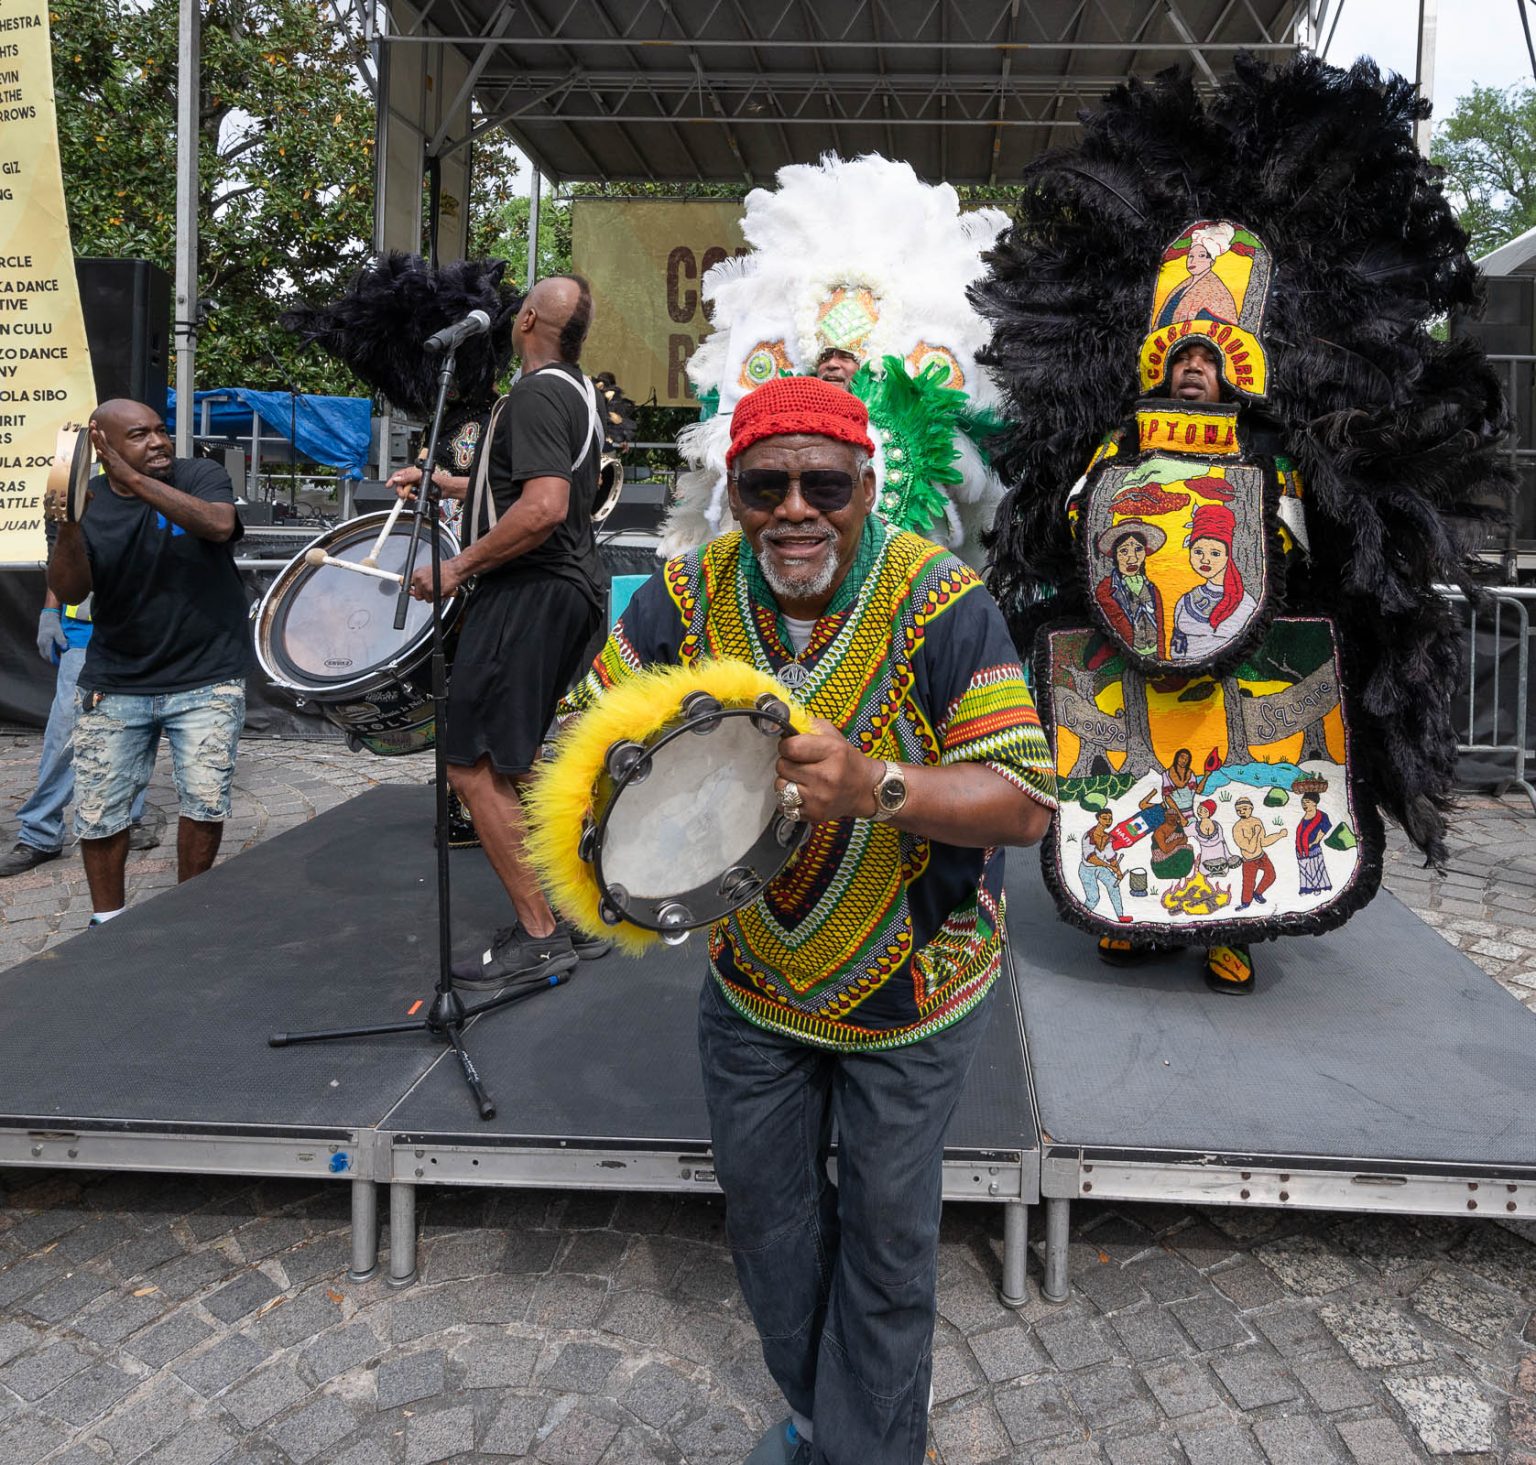 2023 Congo Square Rhythms Festival, Mardi Gras Indian Battle, Music